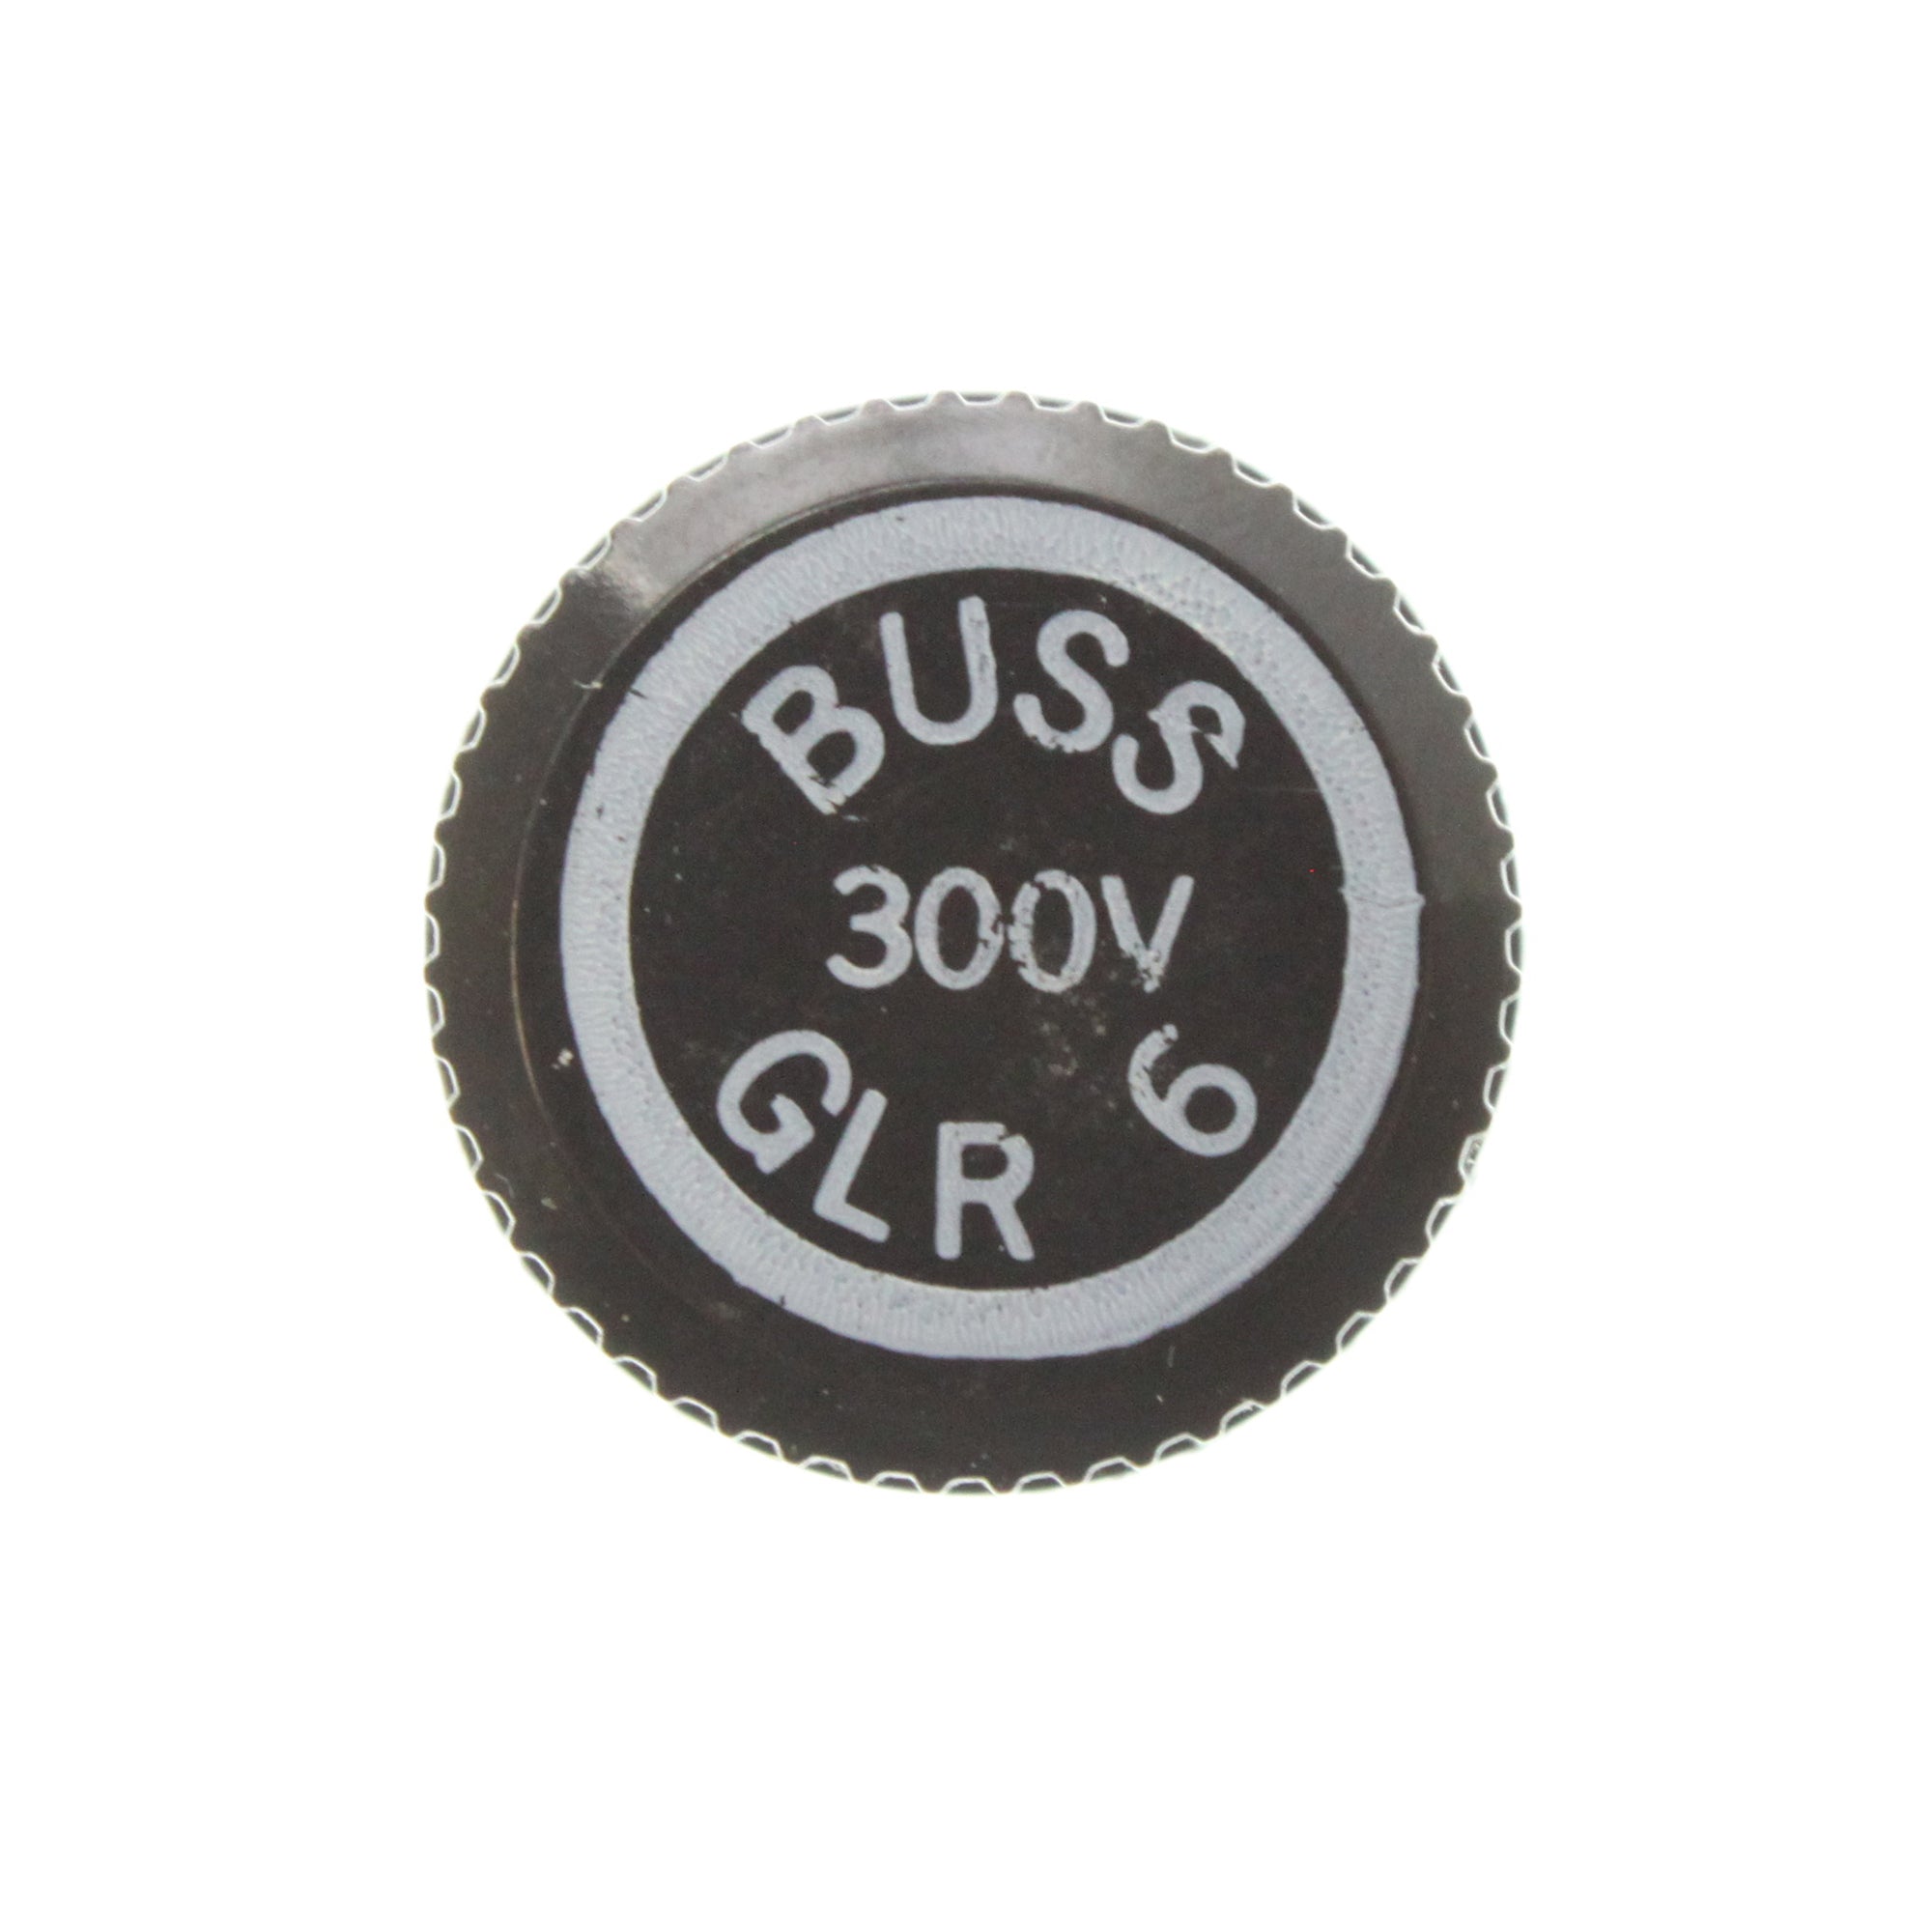 Bussman, BUSSMAN GLR-6 NON-REJECTING FAST-ACTING INLINE FUSE 300-VOLT, 6-AMP